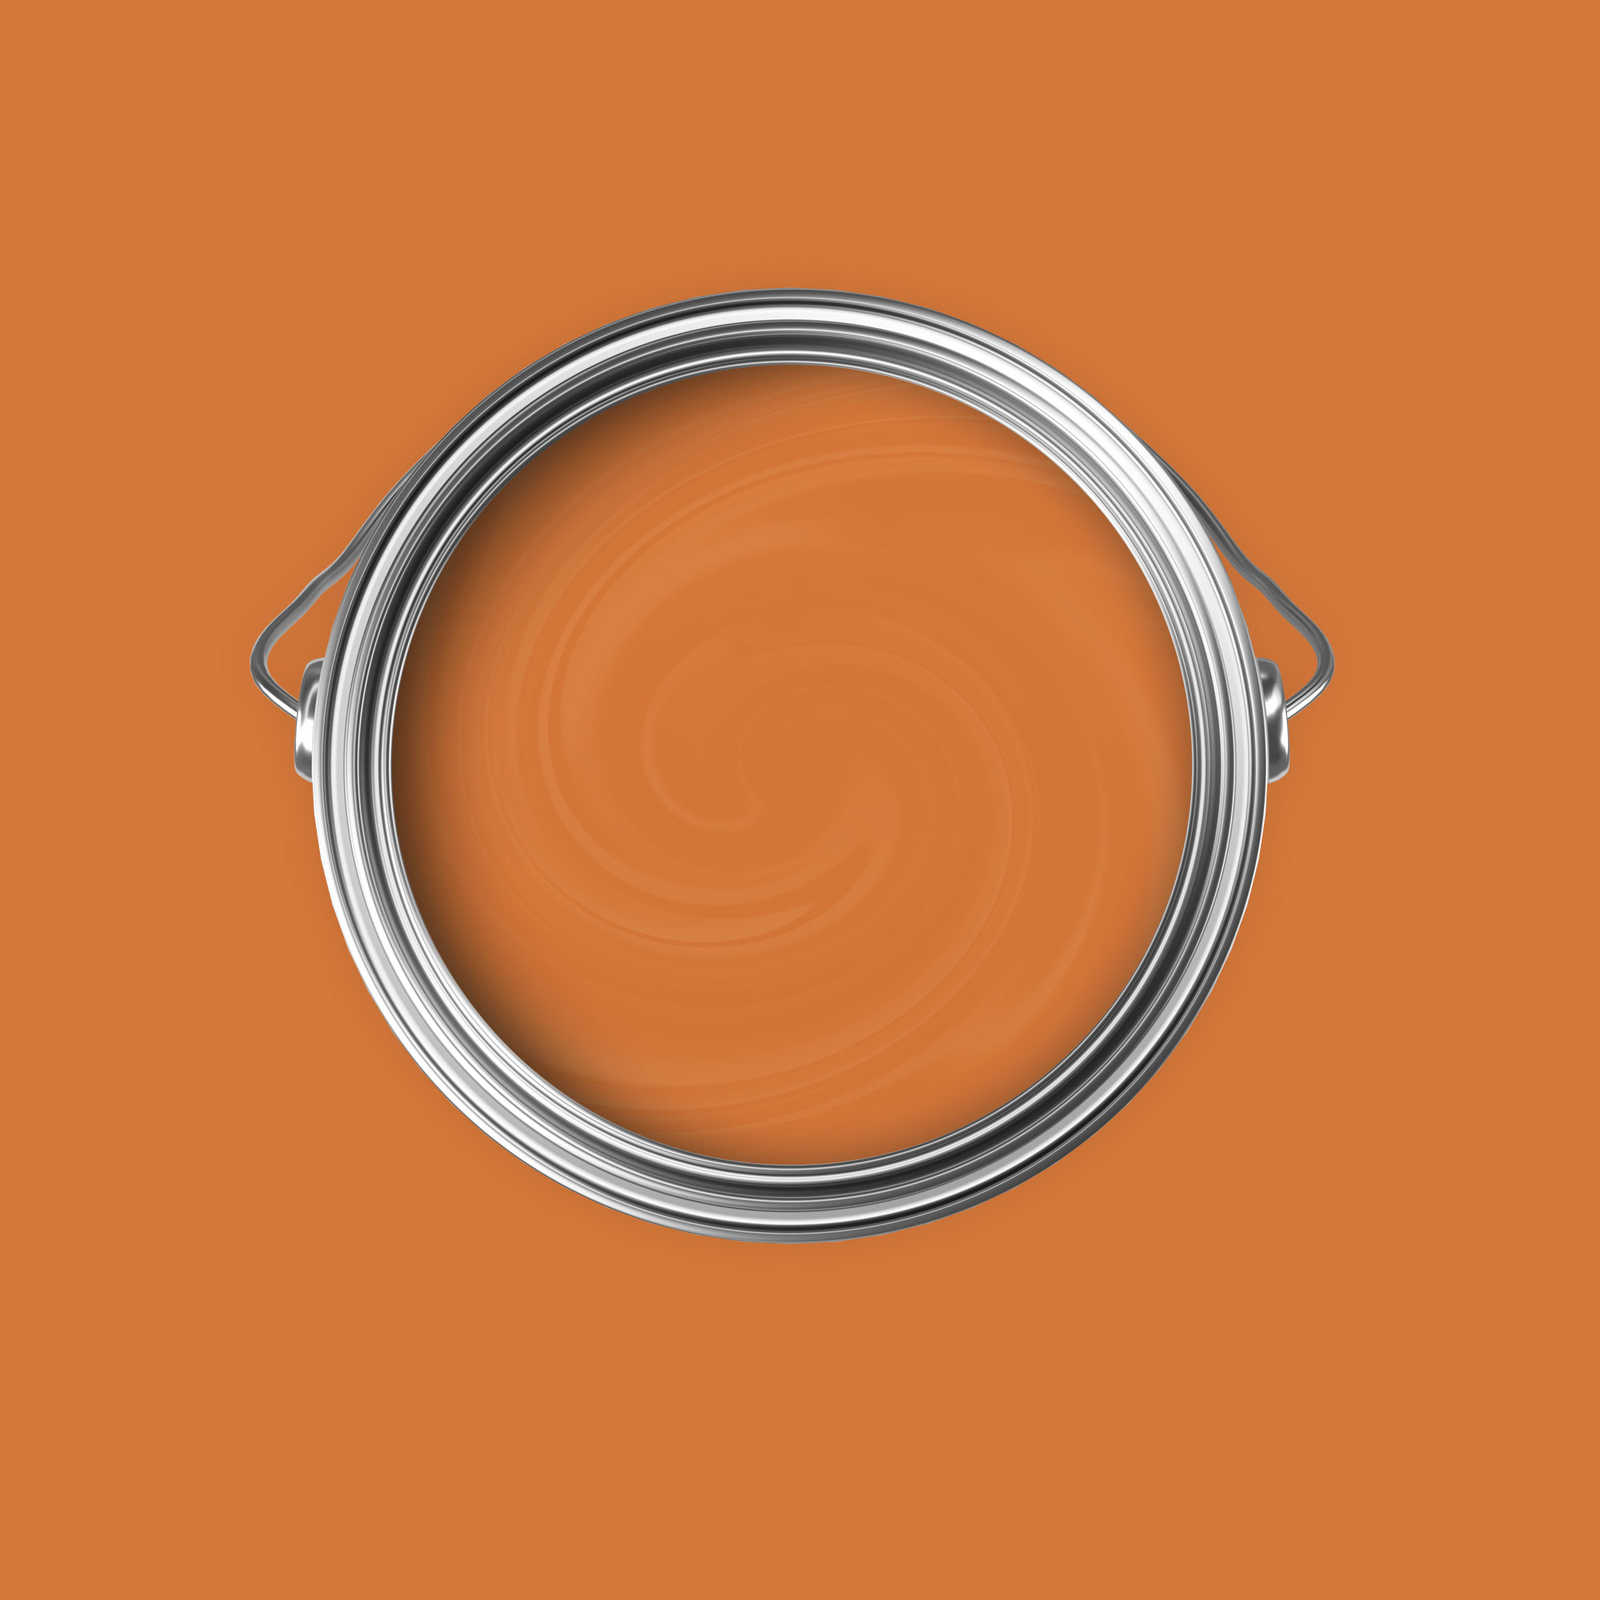             Premium Muurverf Warm Oranje »Pretty Peach« NW903 – 5 liter
        